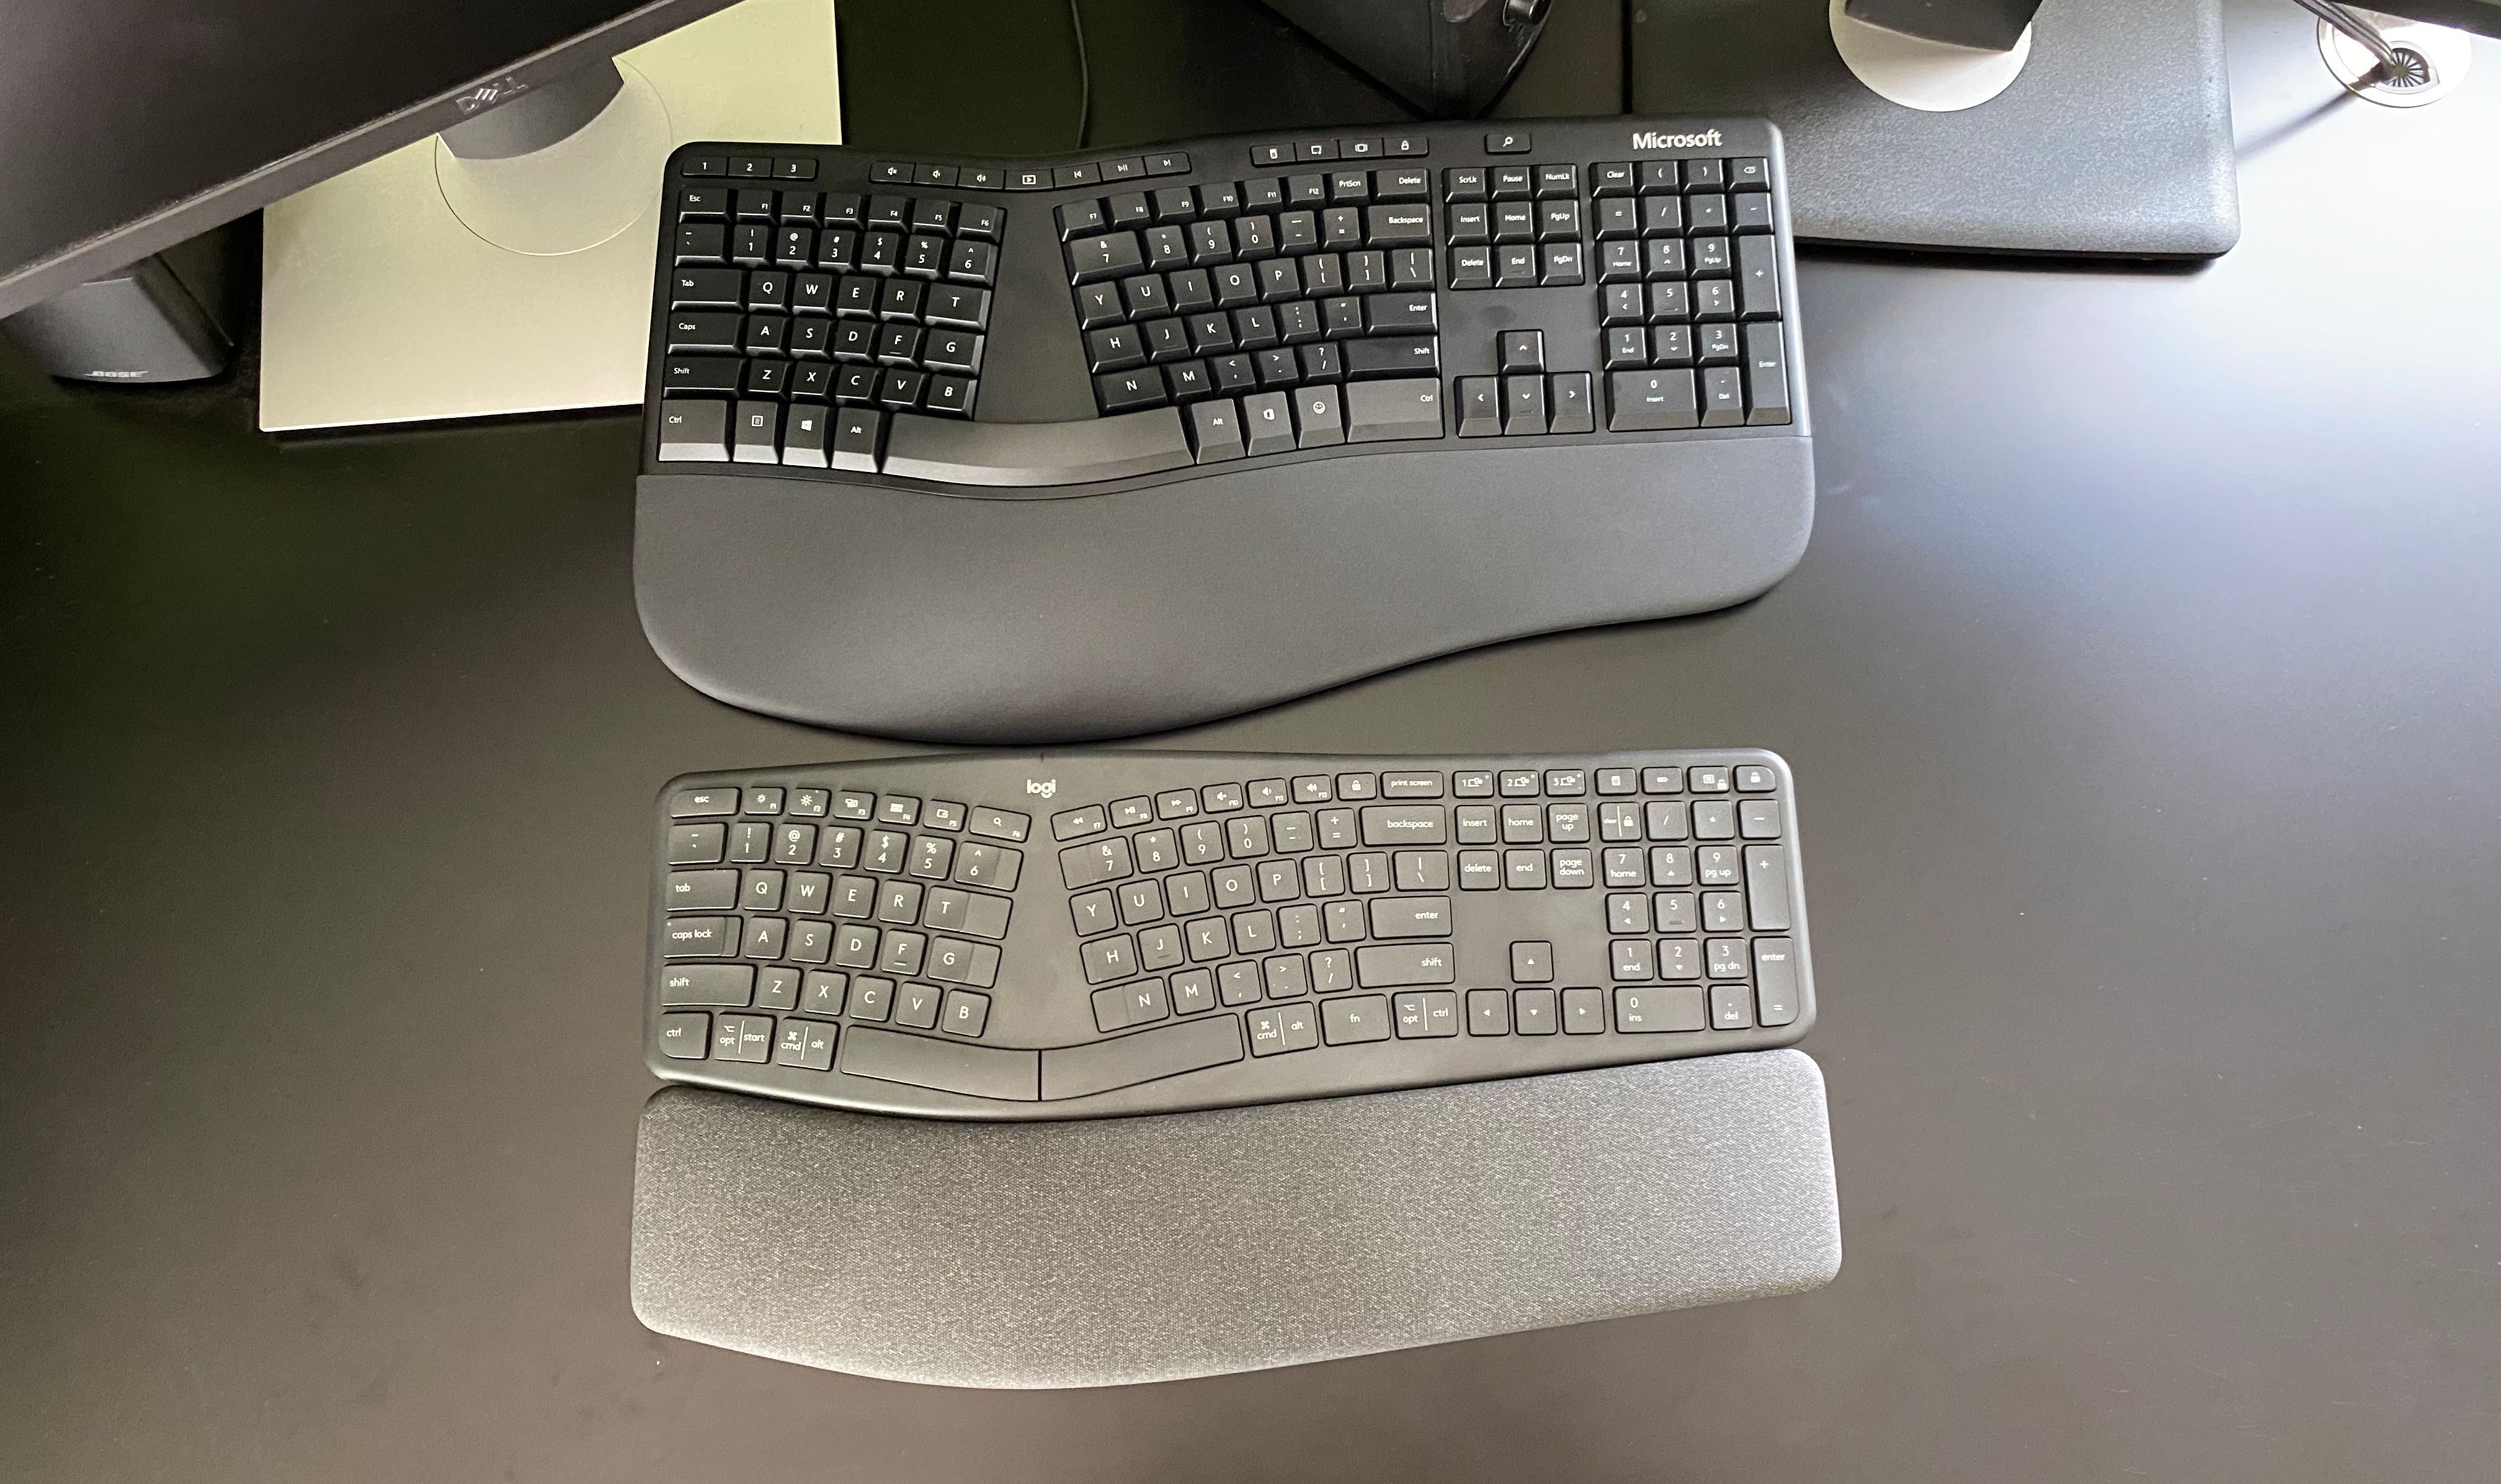 Microsoft – Surface Ergonomic Keyboard – Clavier sans fil